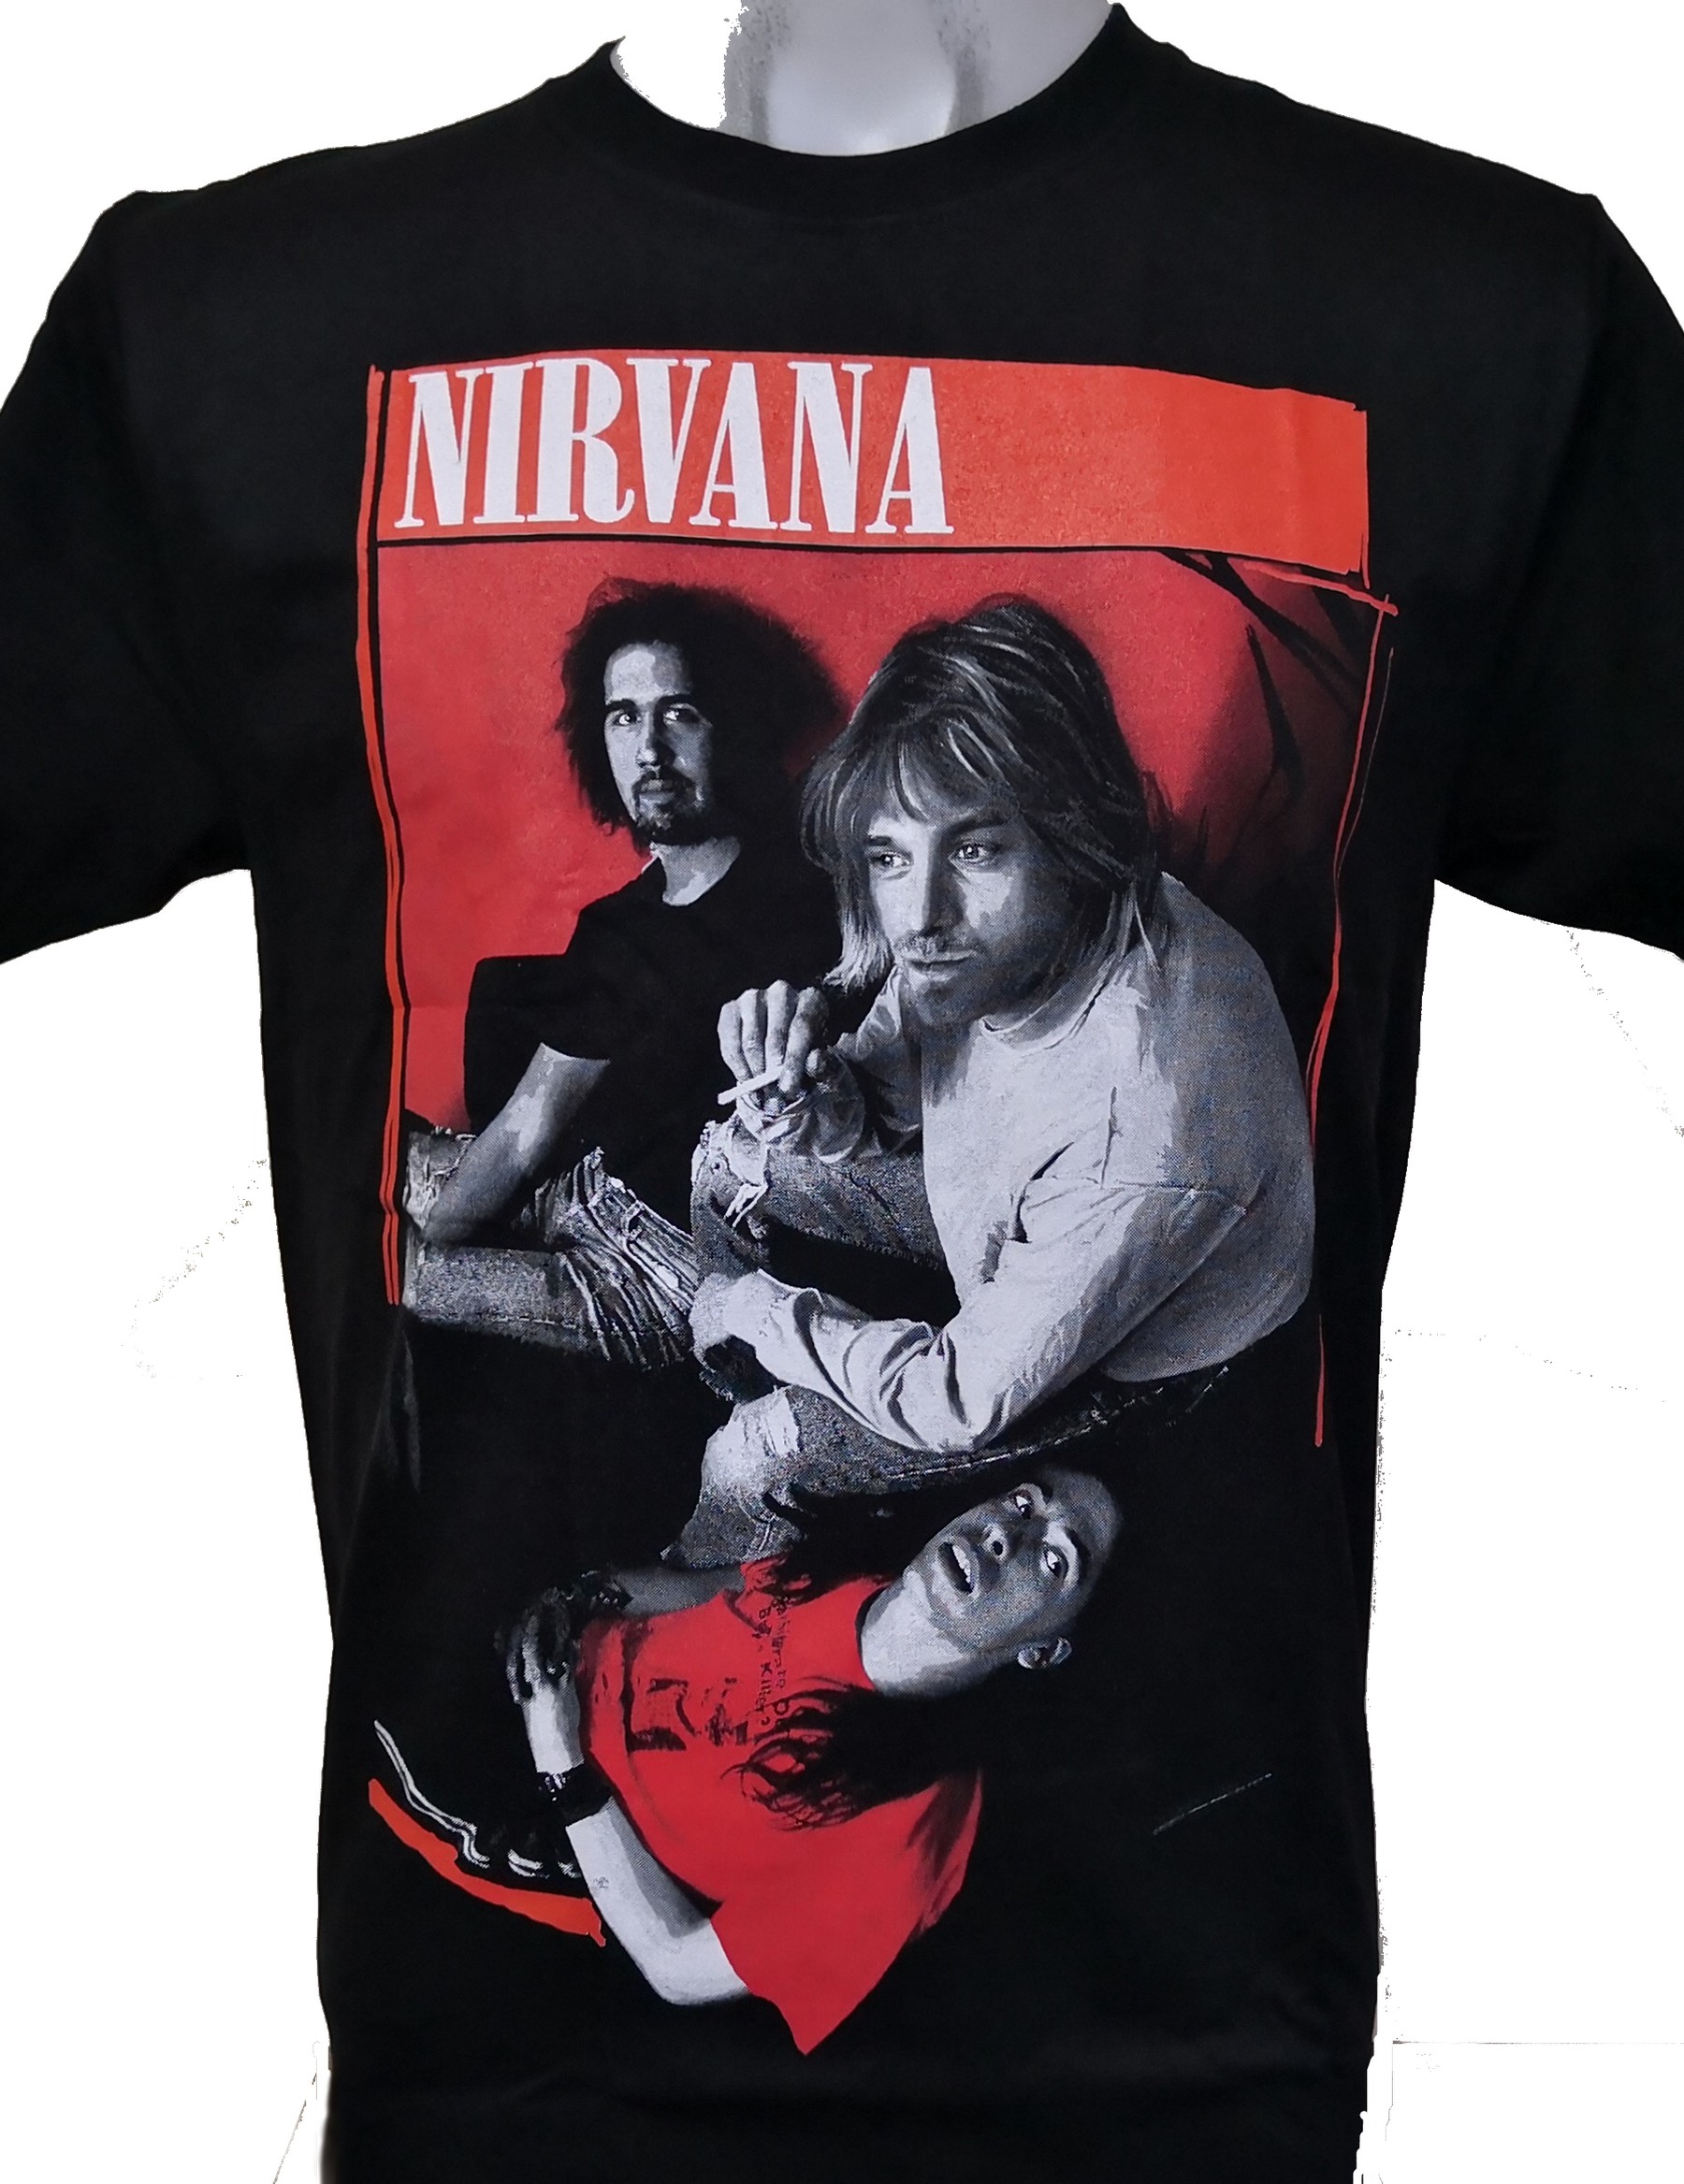 nirvana shirt price